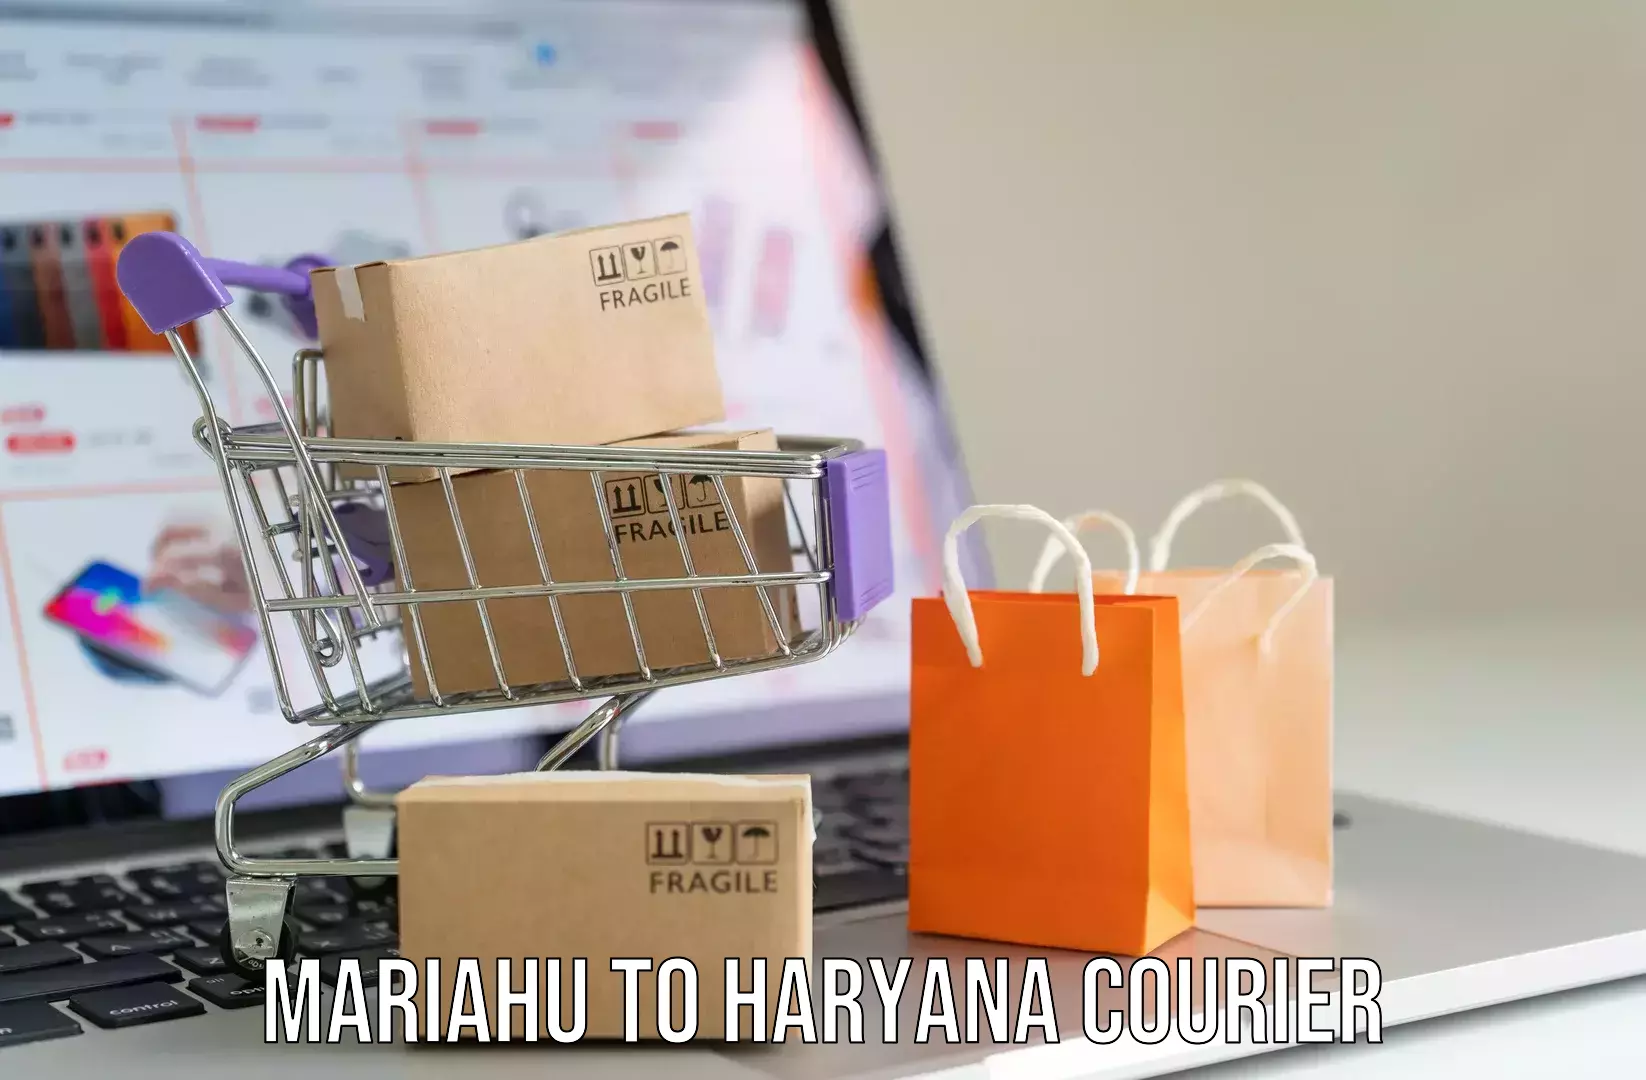 Same day luggage service Mariahu to NCR Haryana